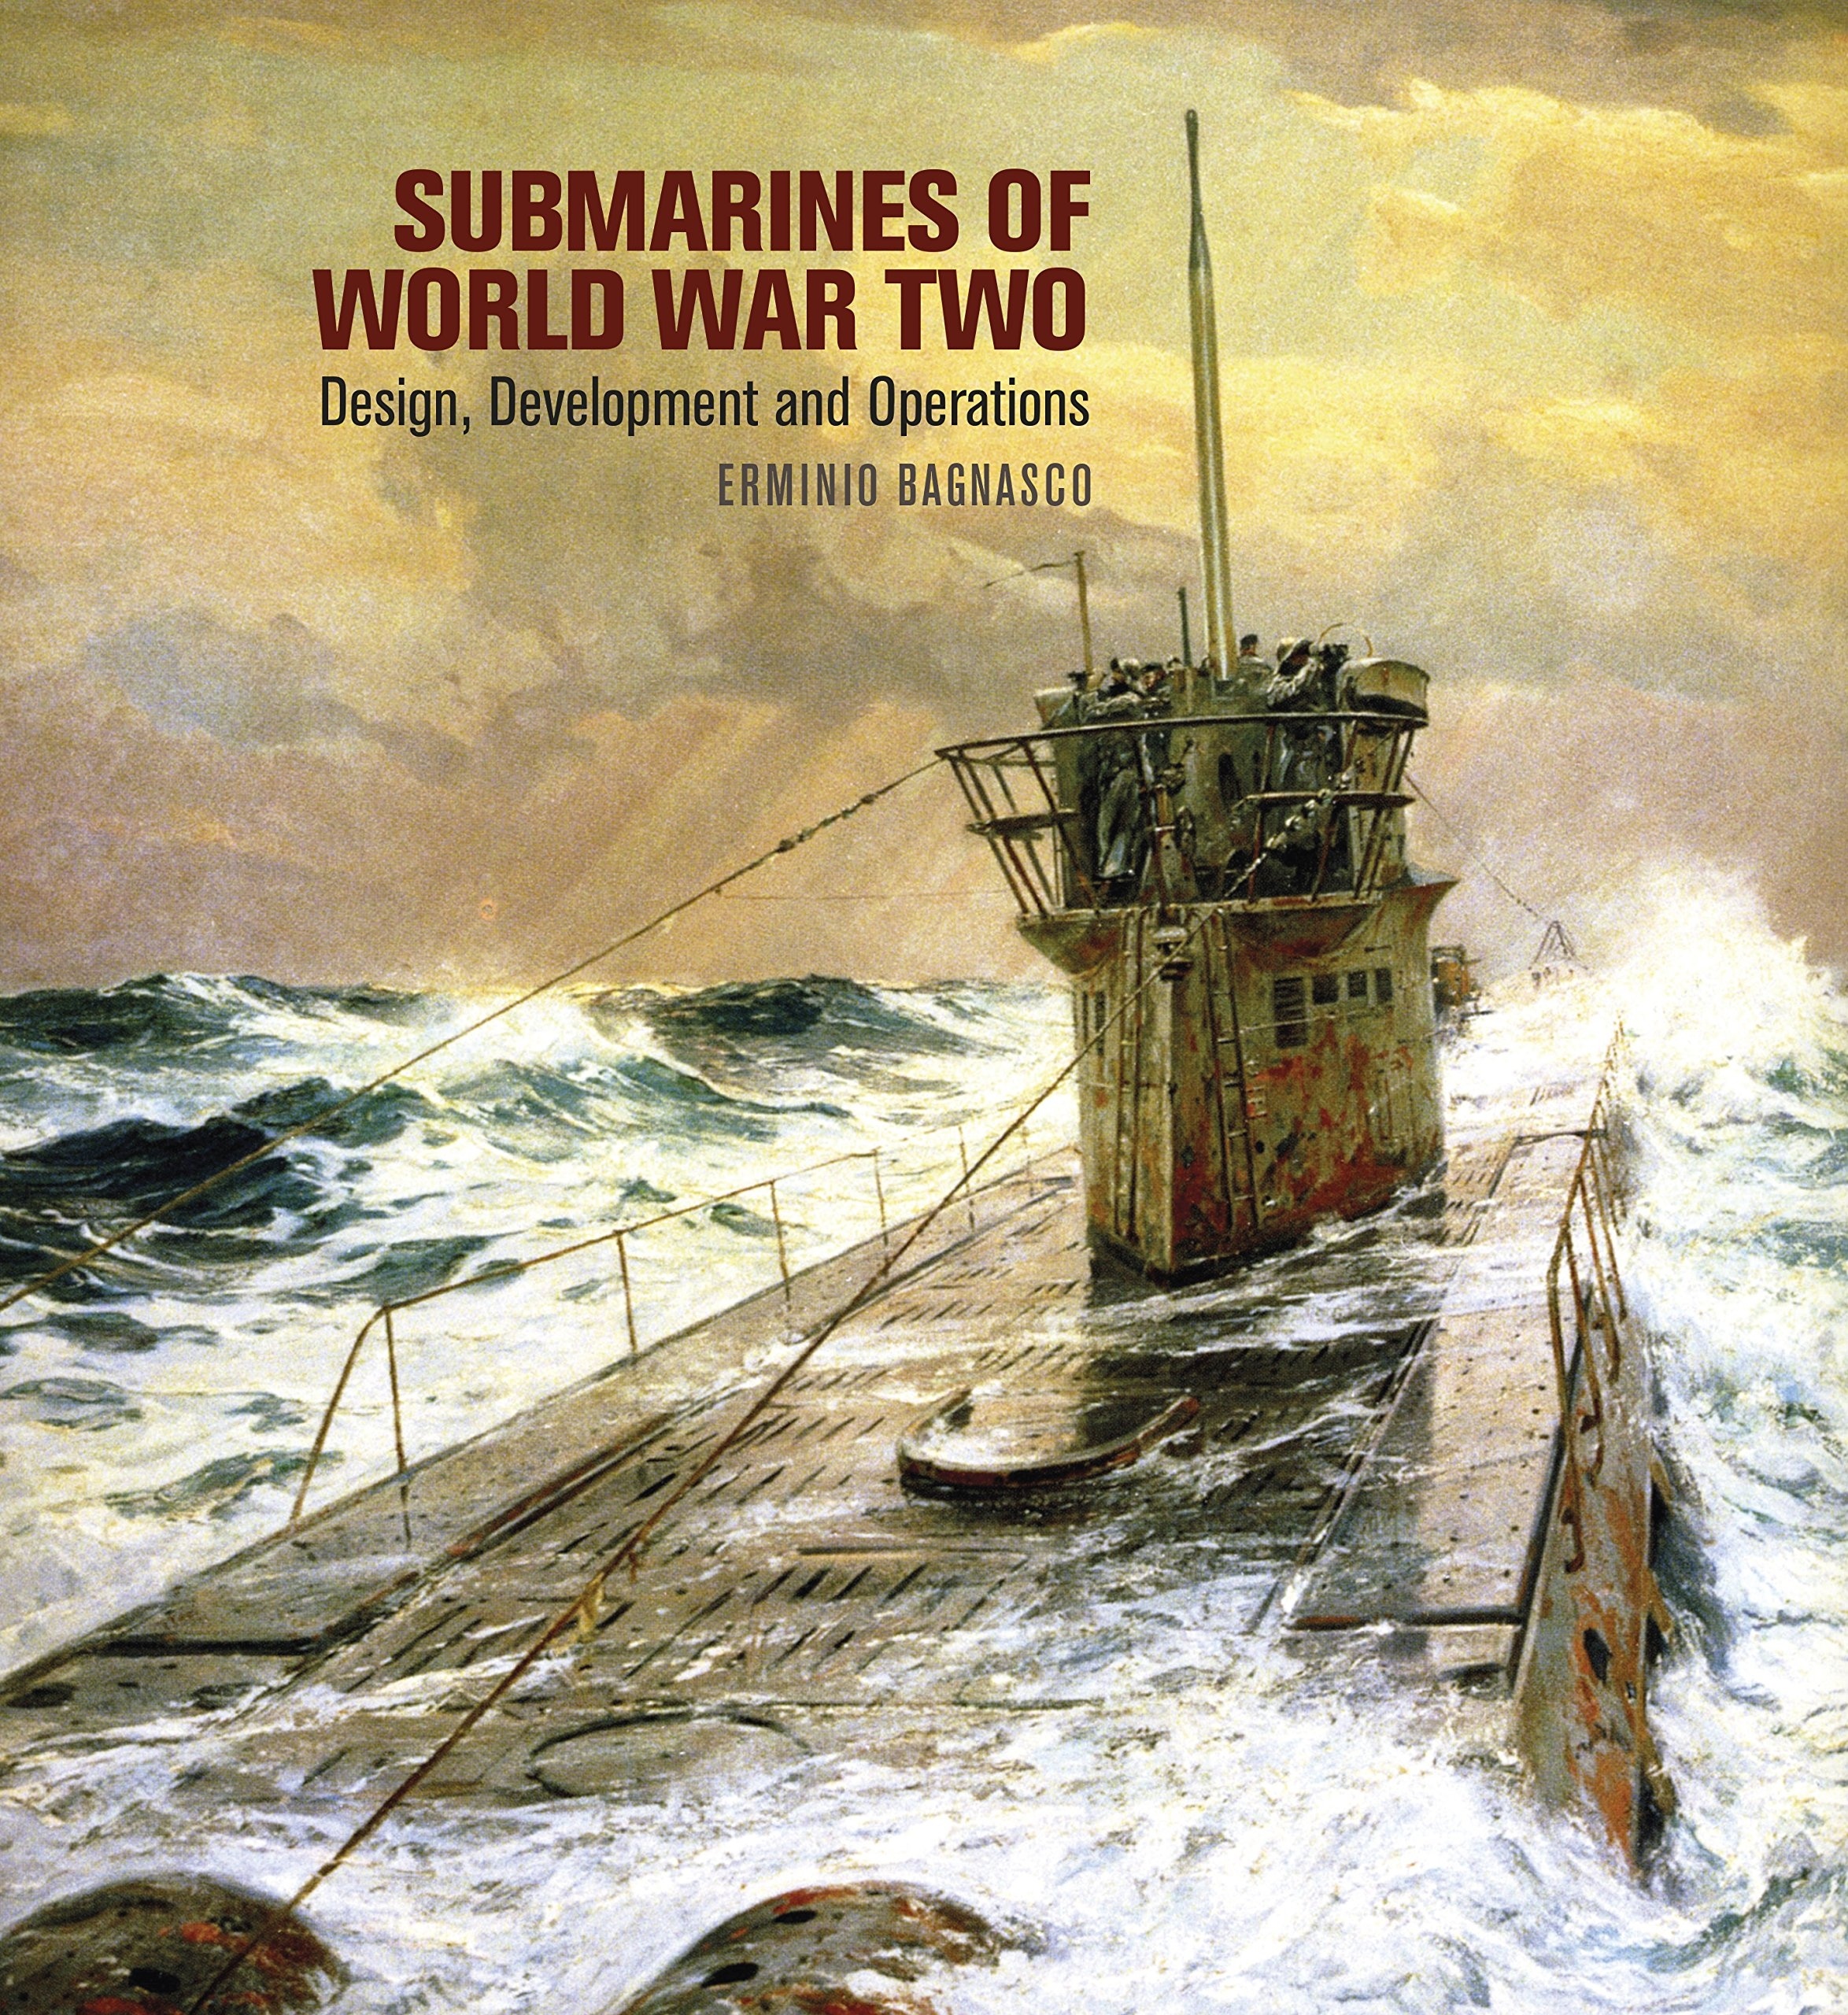 Submarines of World War Two "Design, Development & Operations"